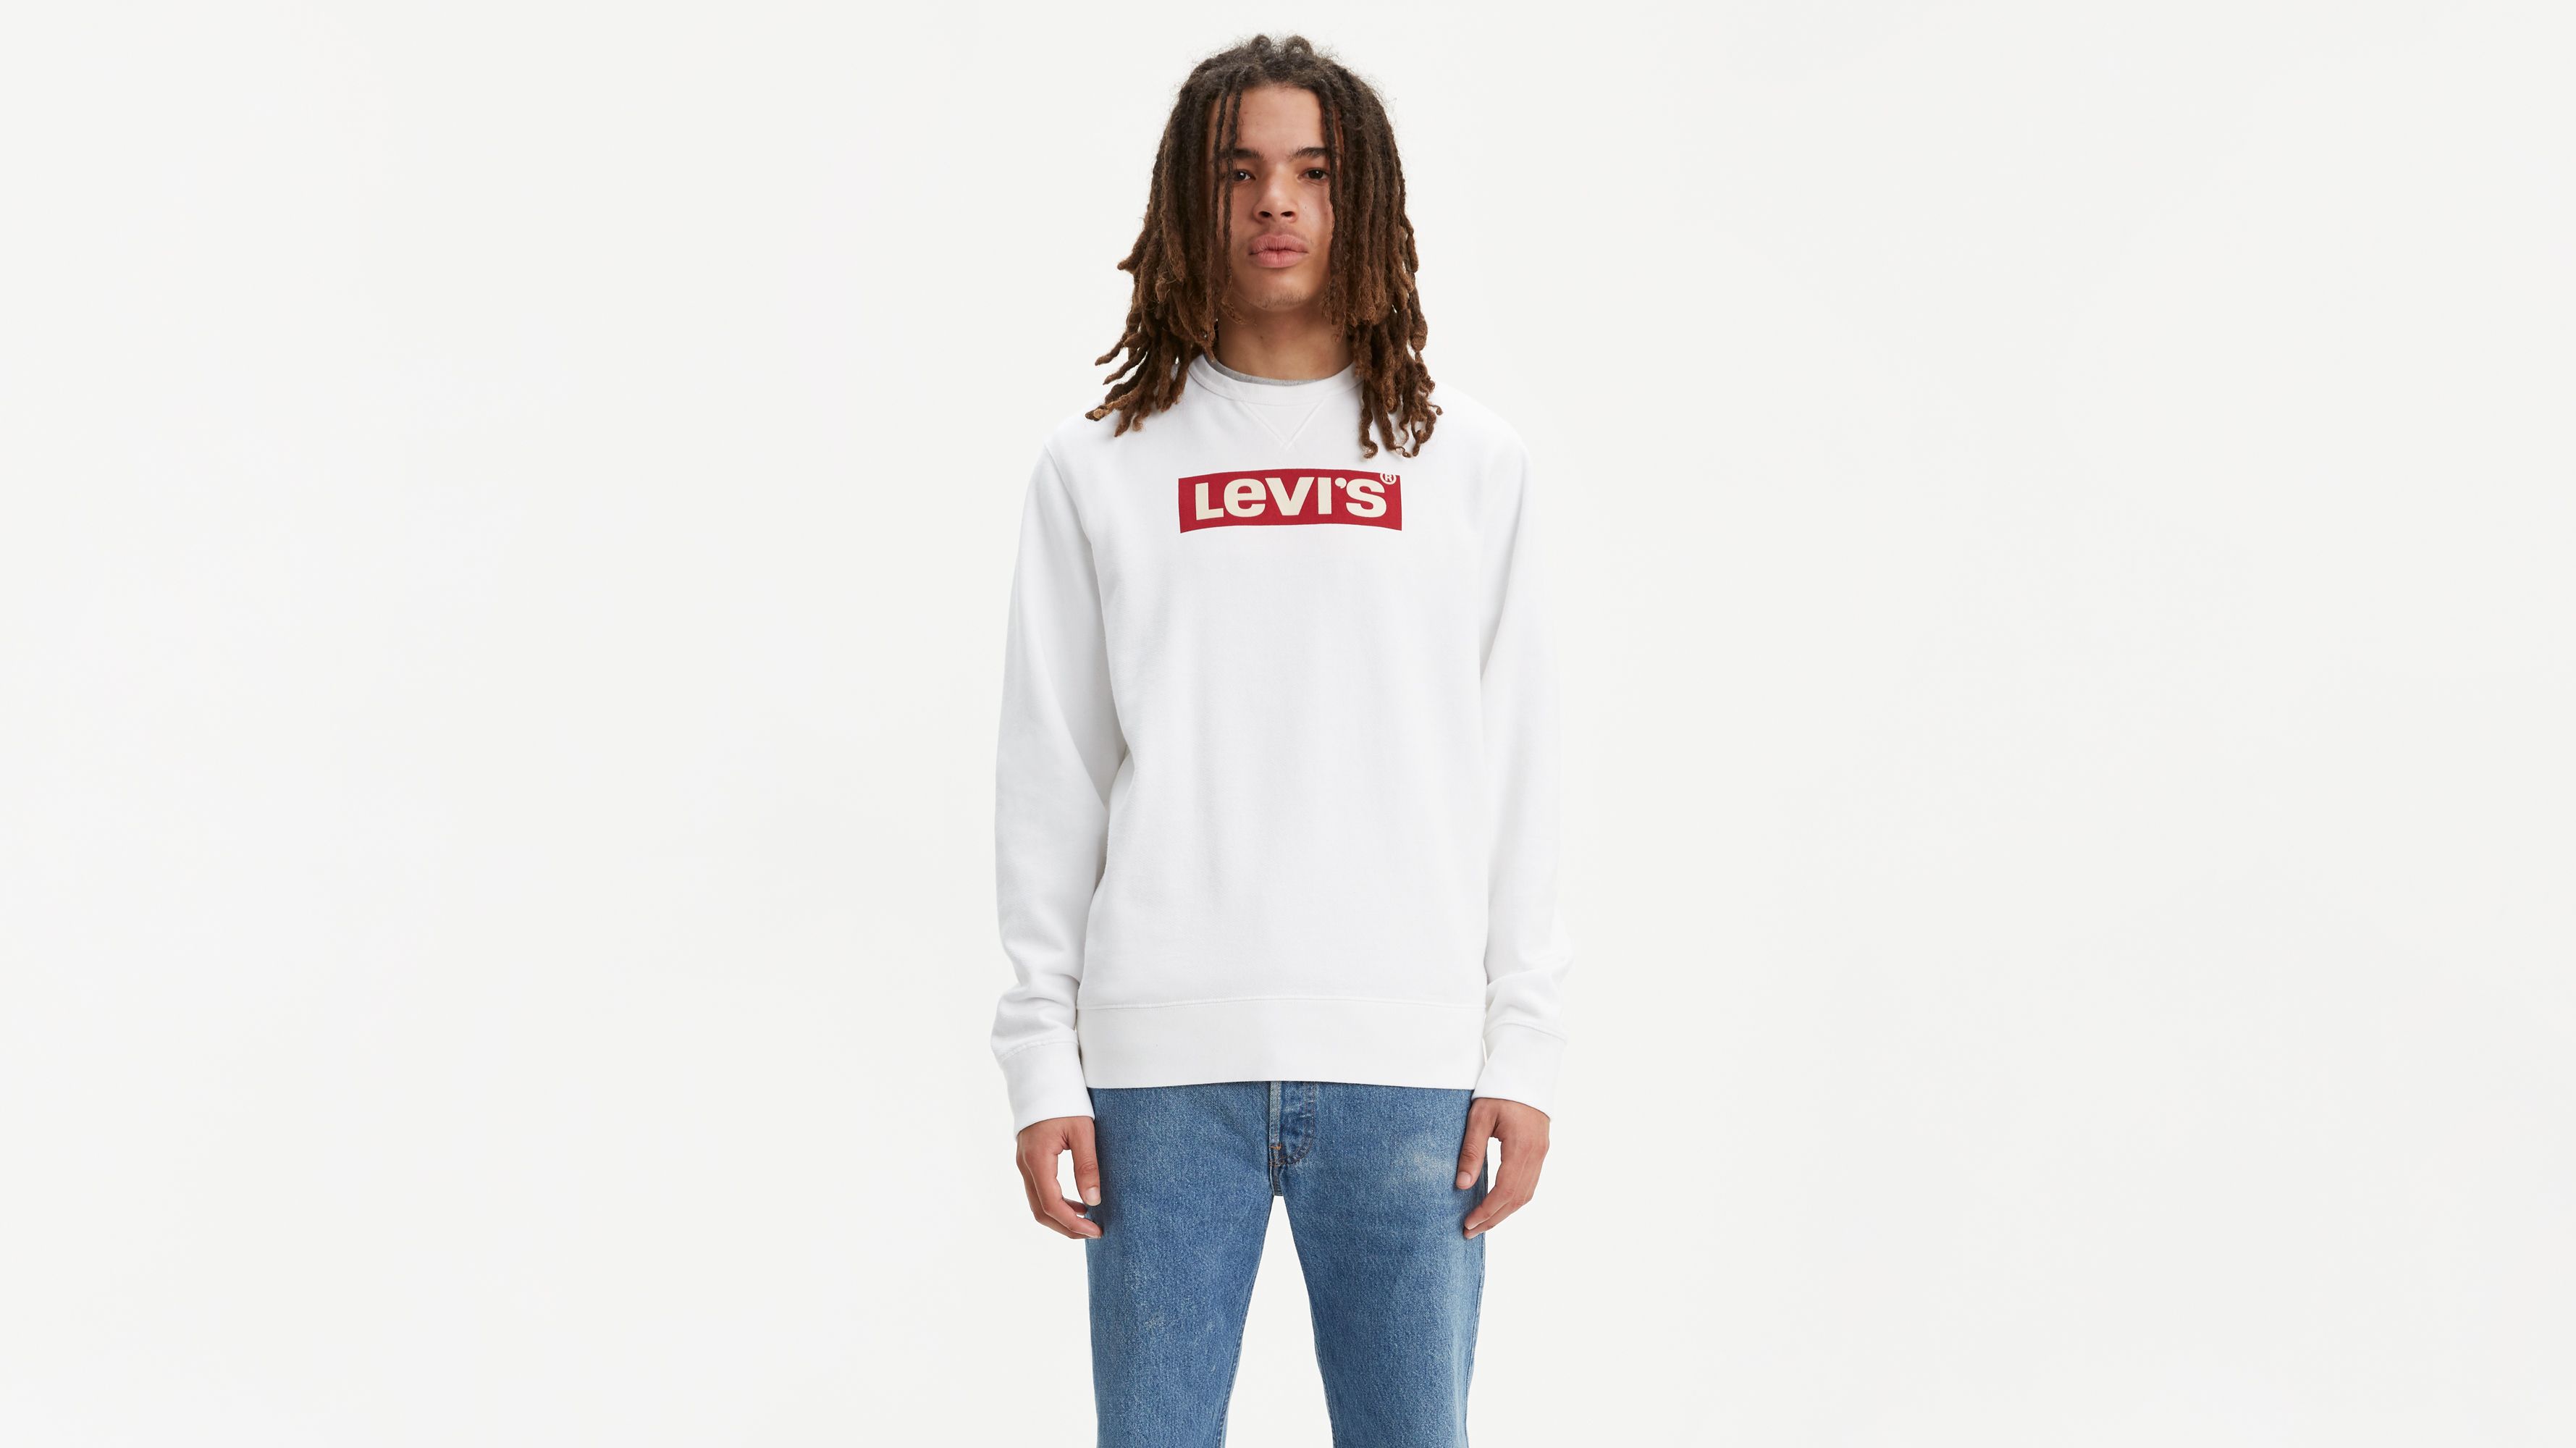 levis sweater